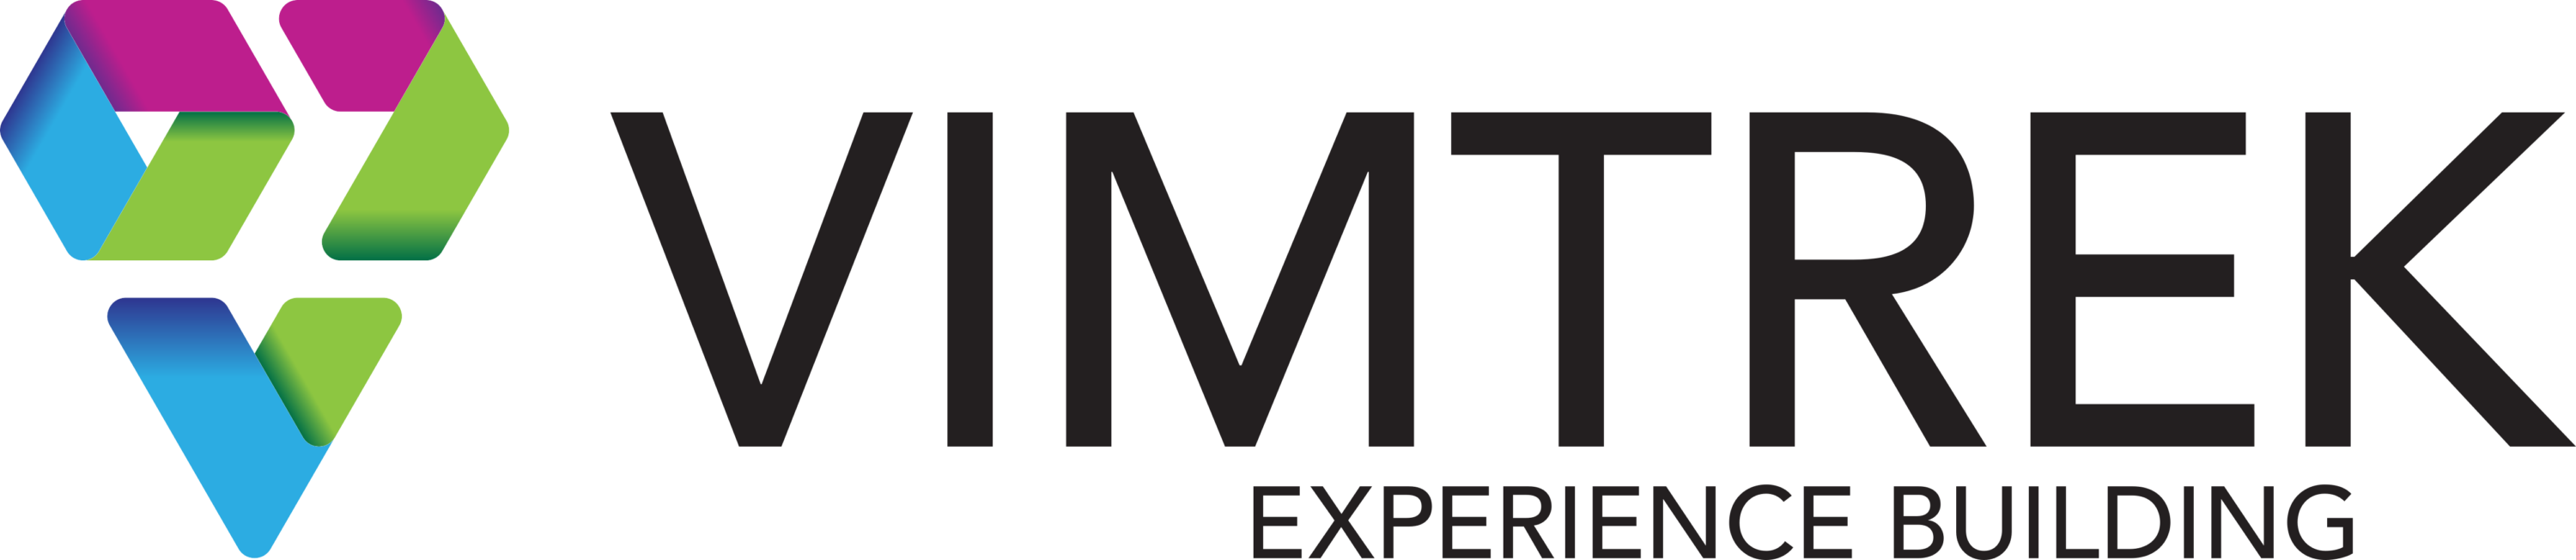 Vimtrek Logo horizontally